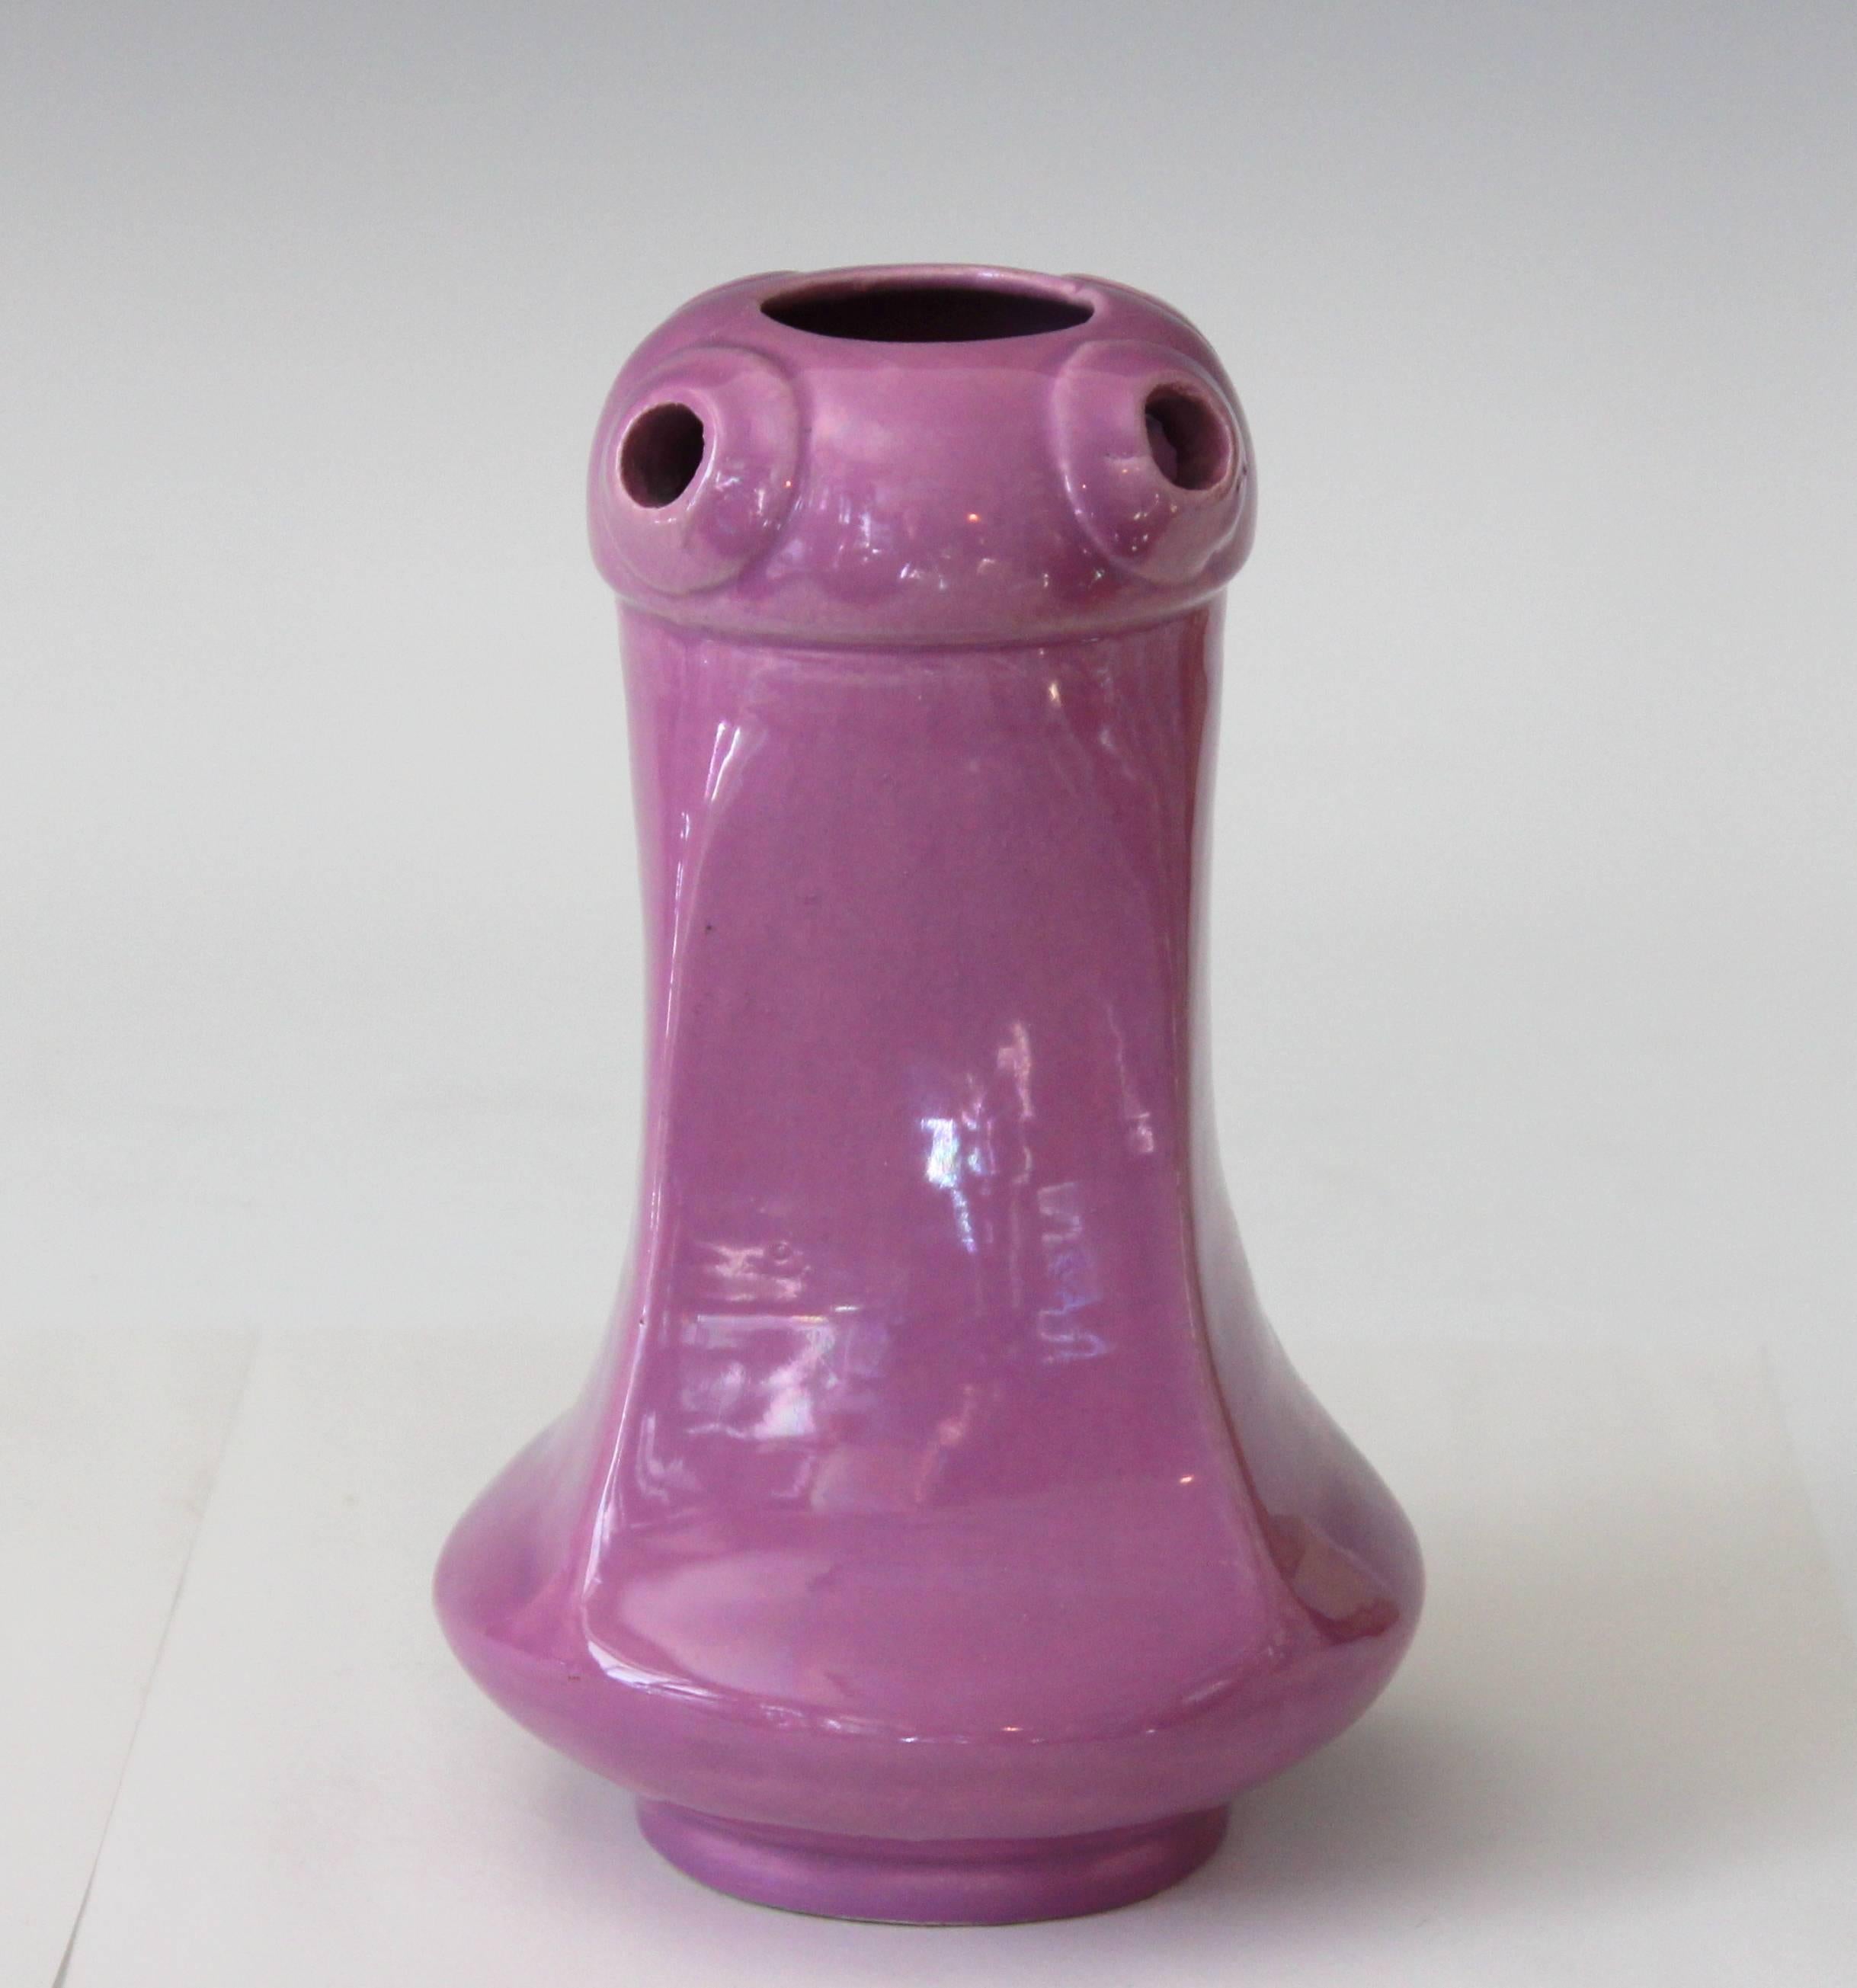 Awaji pottery vase in unusual Art Deco form with pink monochrome glaze, circa 1920s. Measures: 7